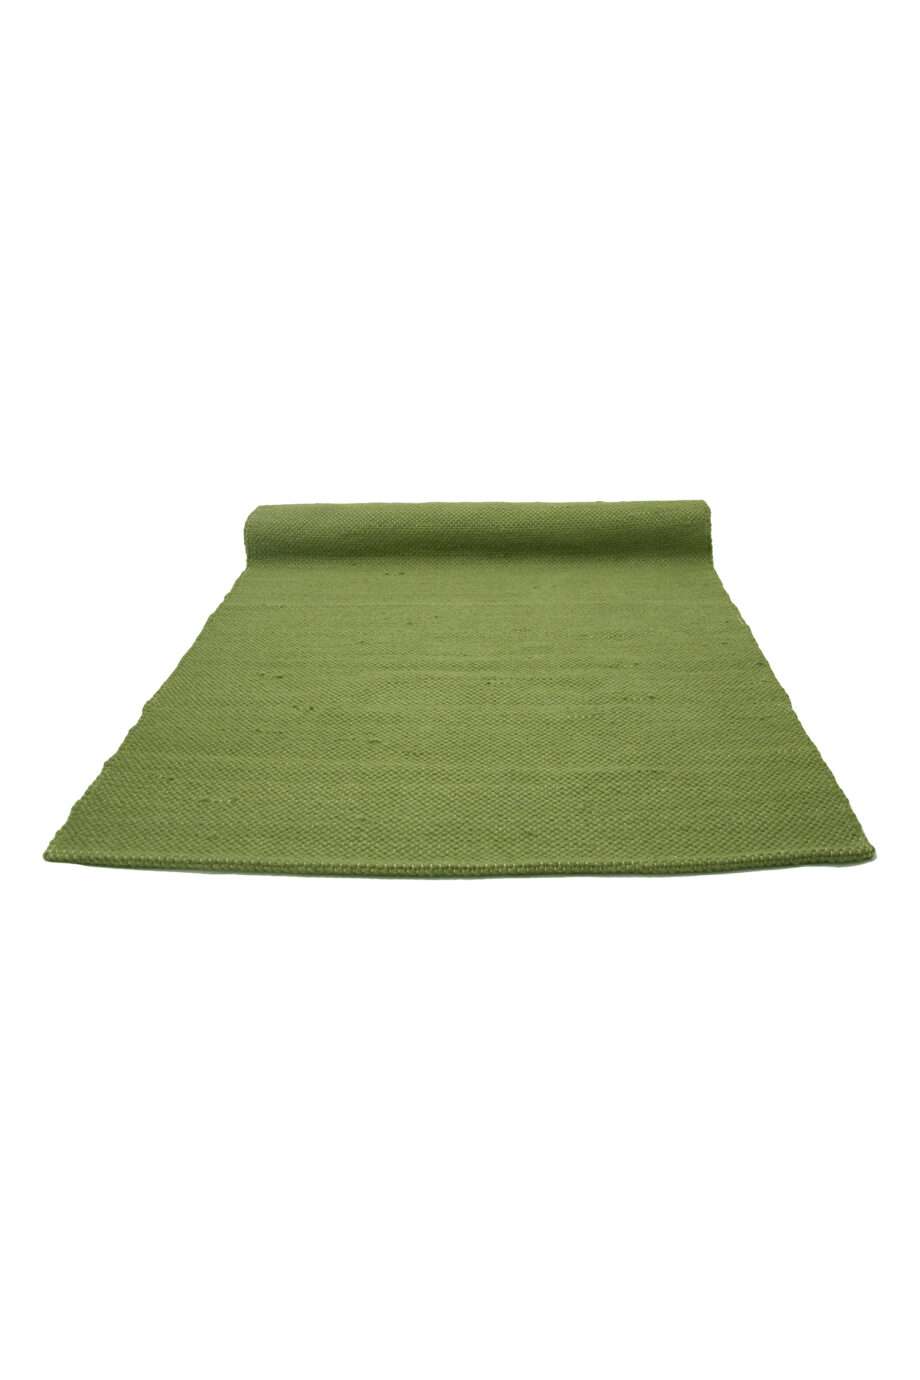 nordic hunter green woven cotton floor runner large